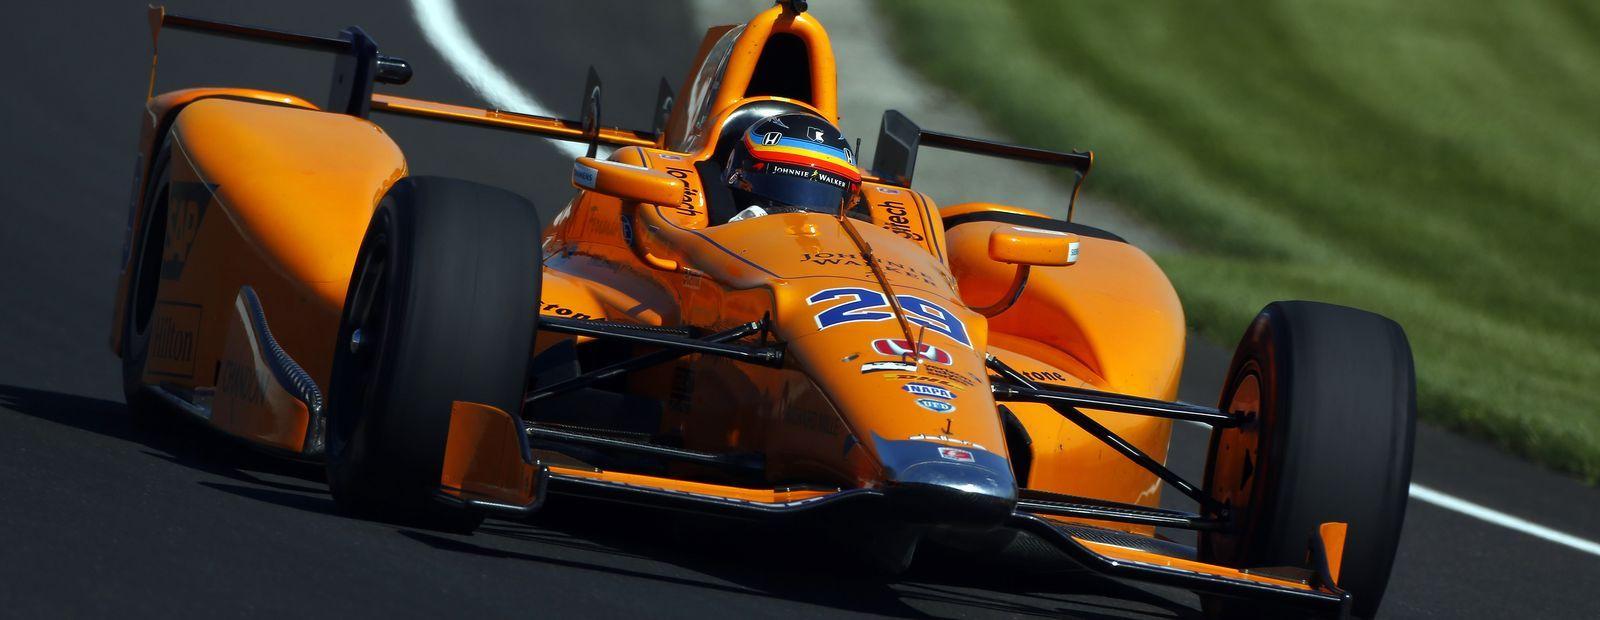 F1 Alonso McLaren Logo - McLaren Formula 1 returns to the Indy 500 with Fernando